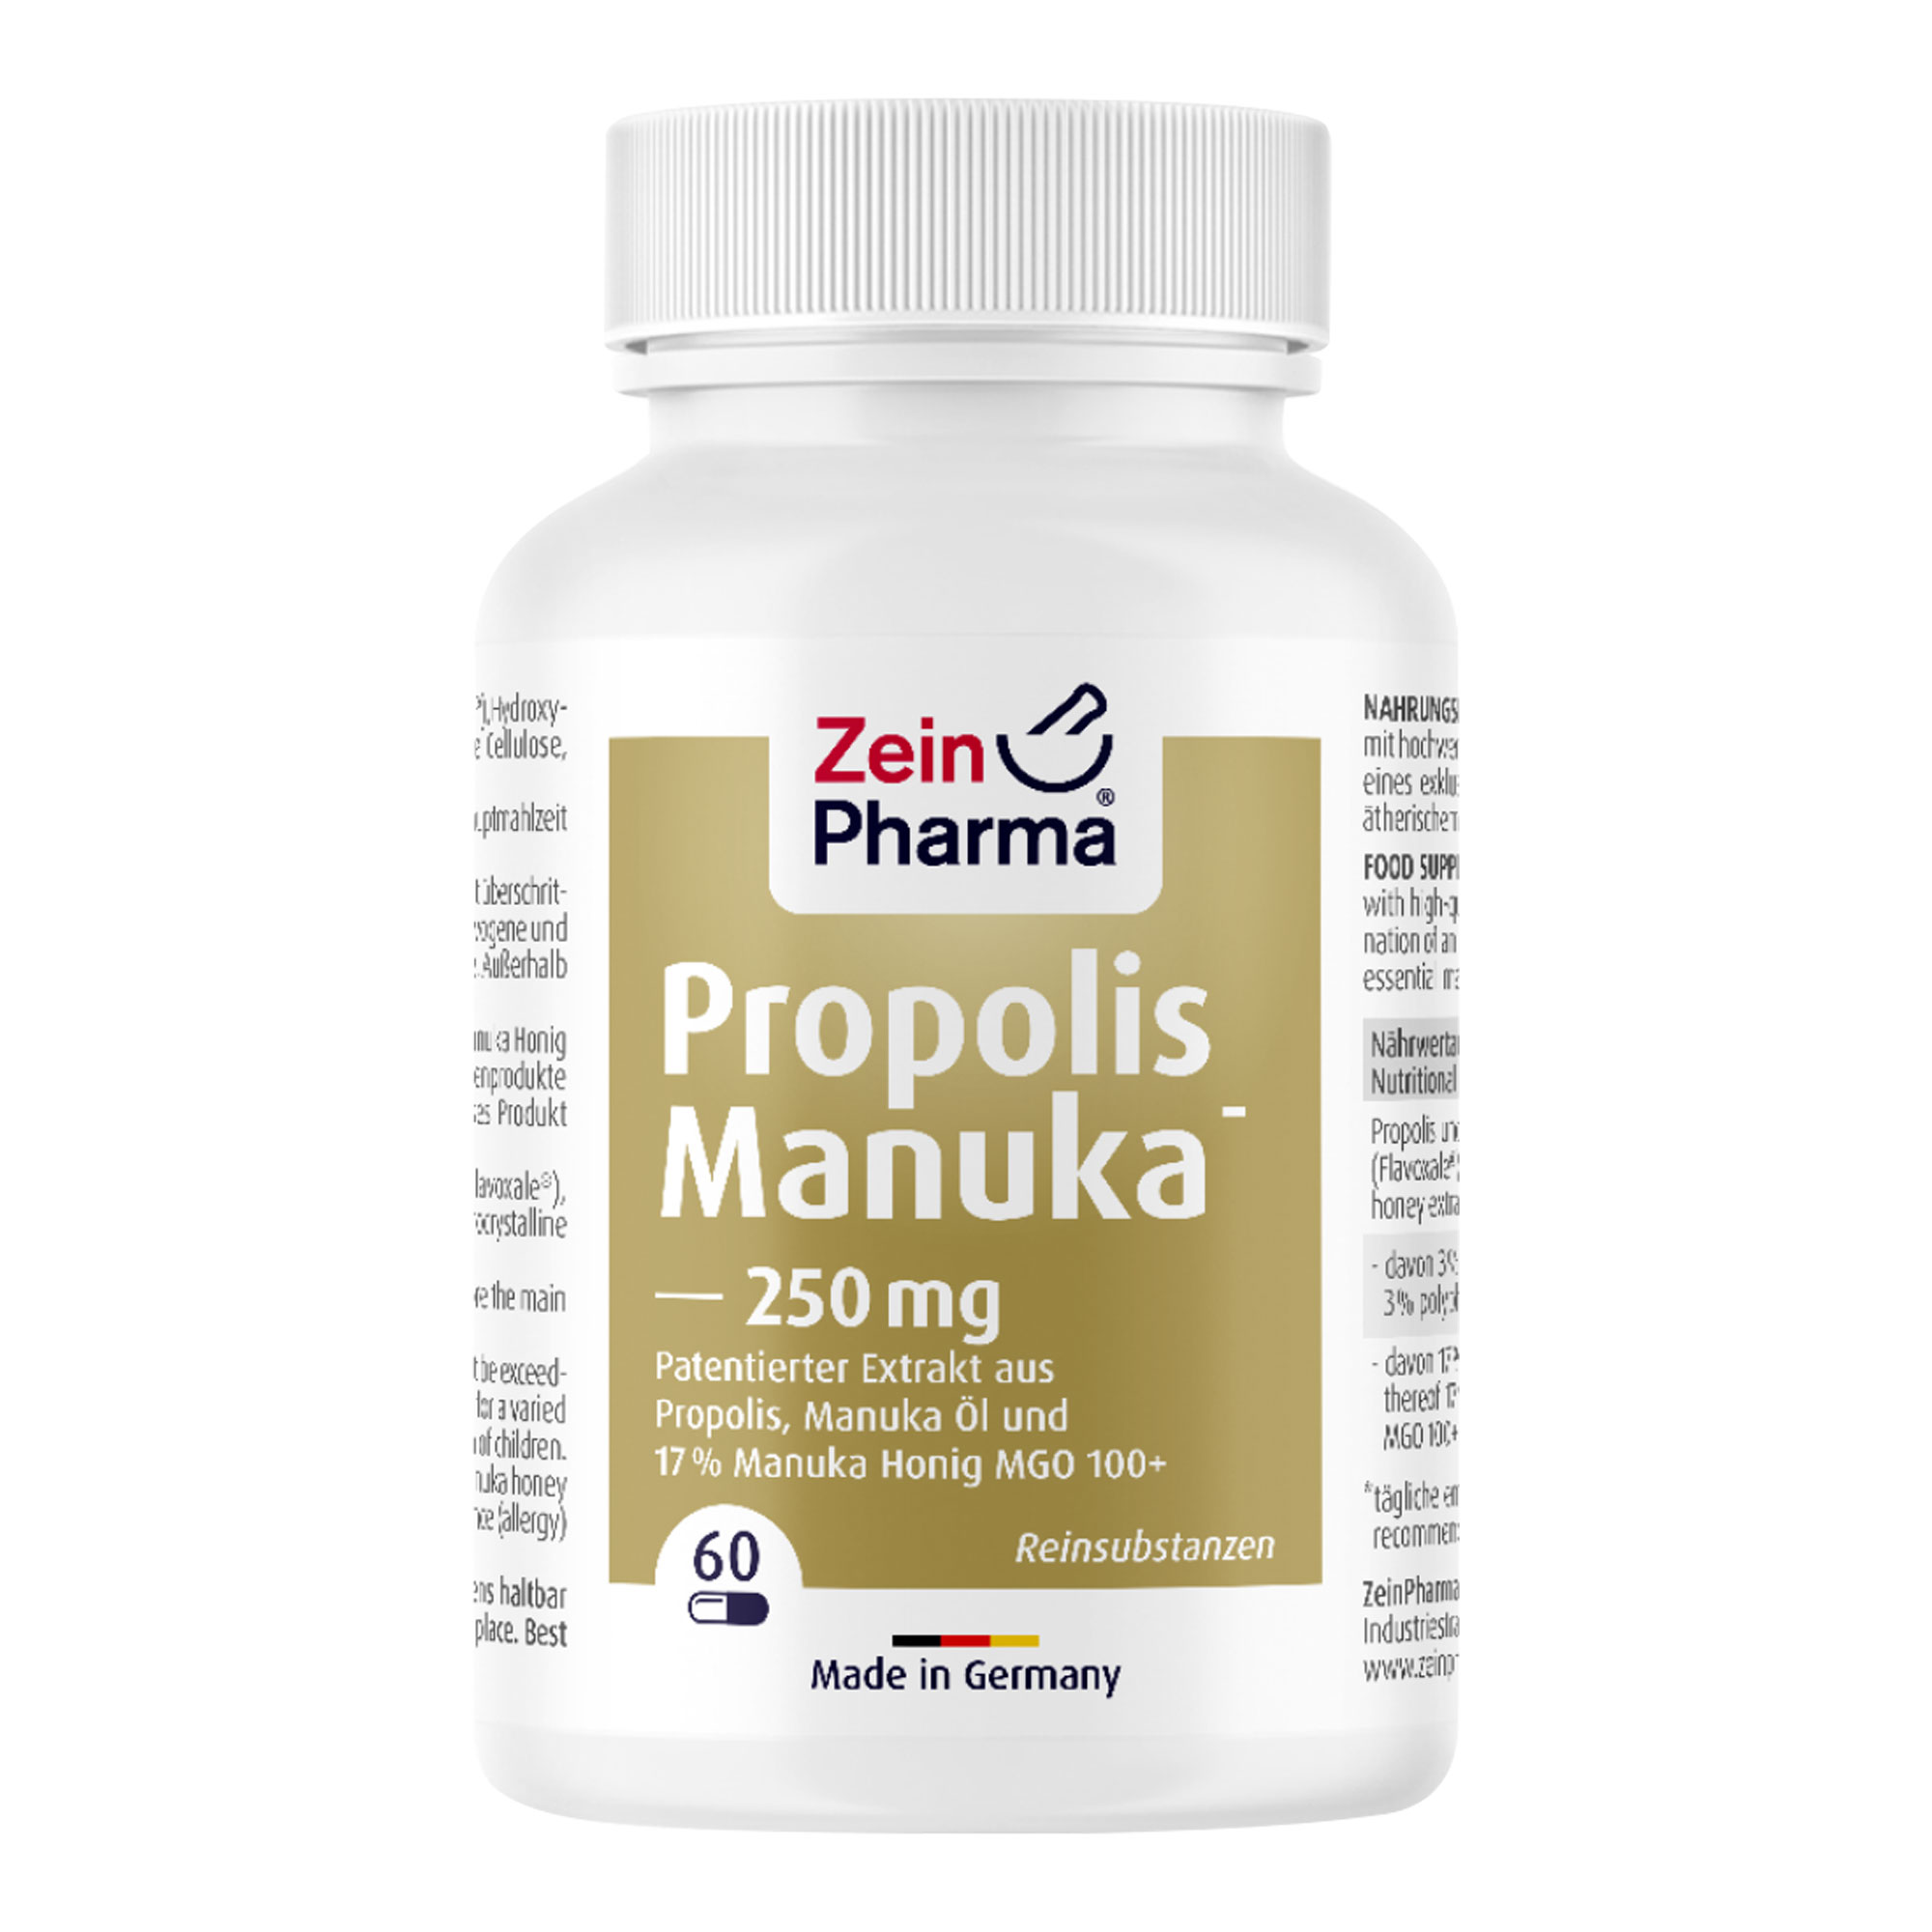 Nahrungsergänzungsmittel mit Propolis-Extraktes, Manuka-Honig und ätherischem Manuka-Öl.